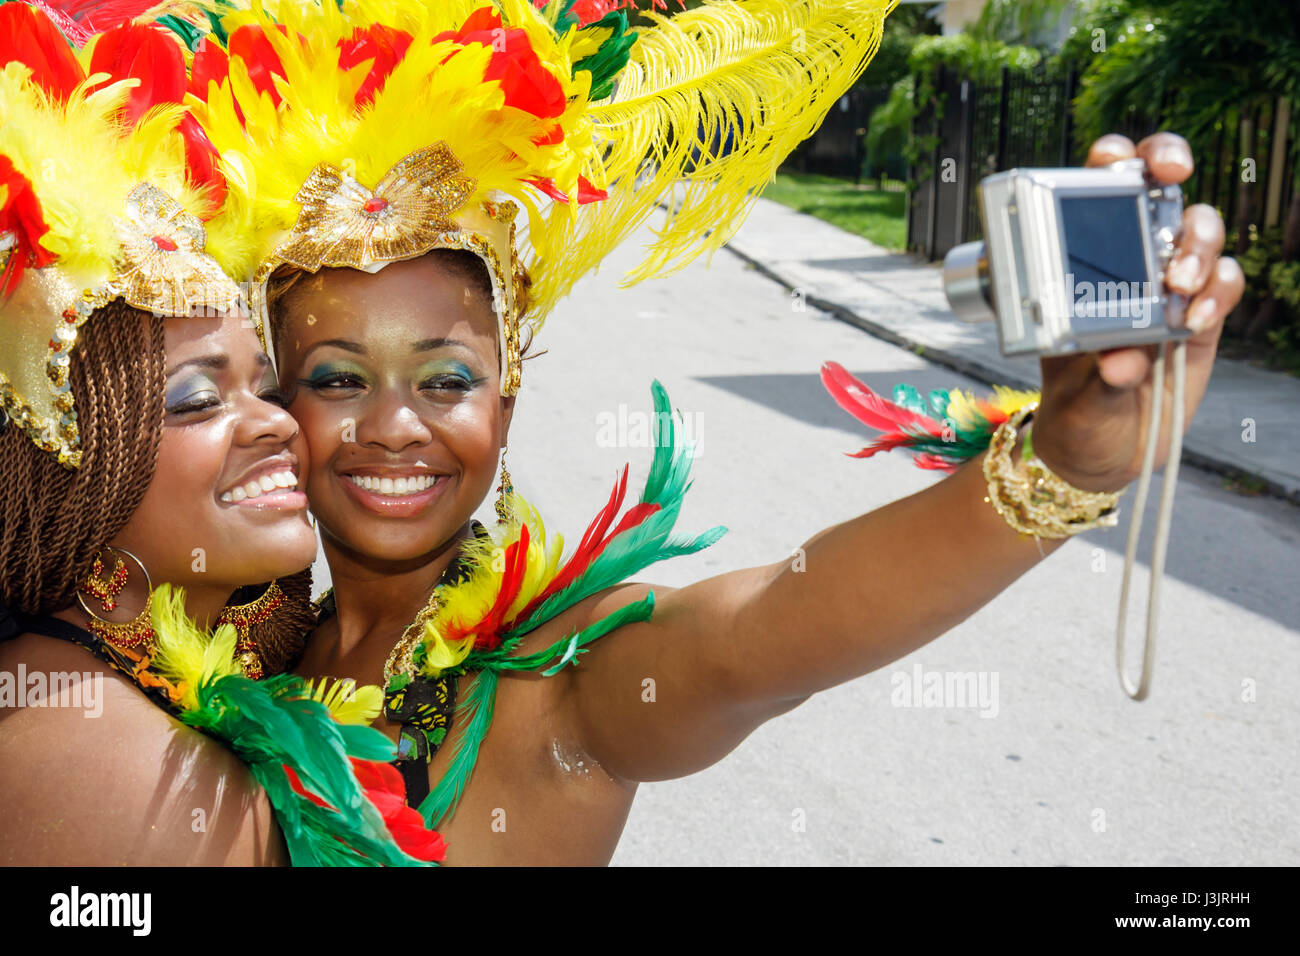 Miami Florida, NE Second 2nd Avenue, Miami Caribbean Carnival, farbenfrohe Kostüme, Festival, Festivals, Parade, schwarze Frau weibliche Frauen, Kopfschmuck, Federn, fol Stockfoto